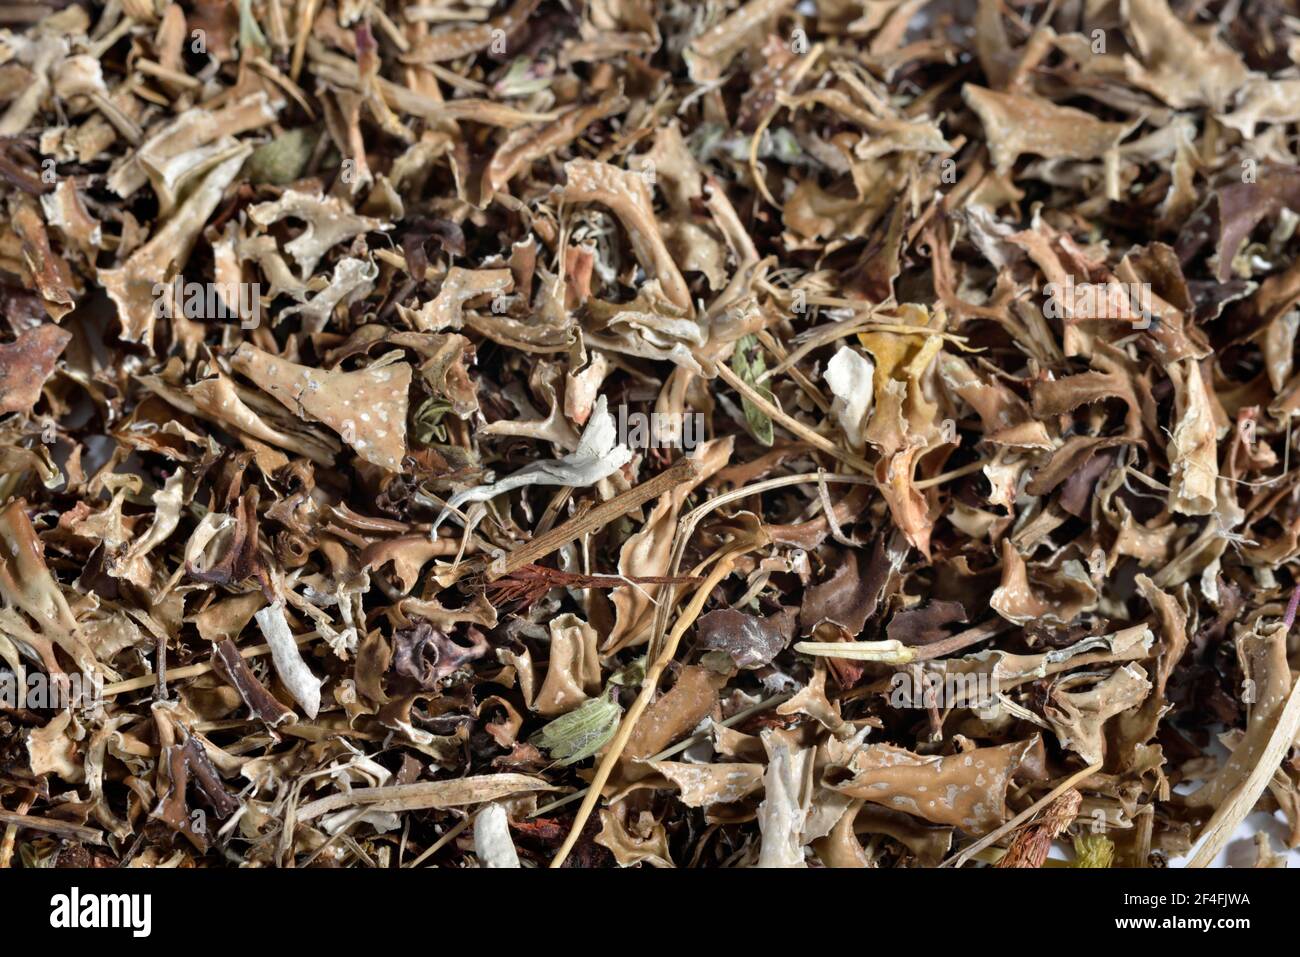 Iceland moss (Cetraria islandica) Stock Photo